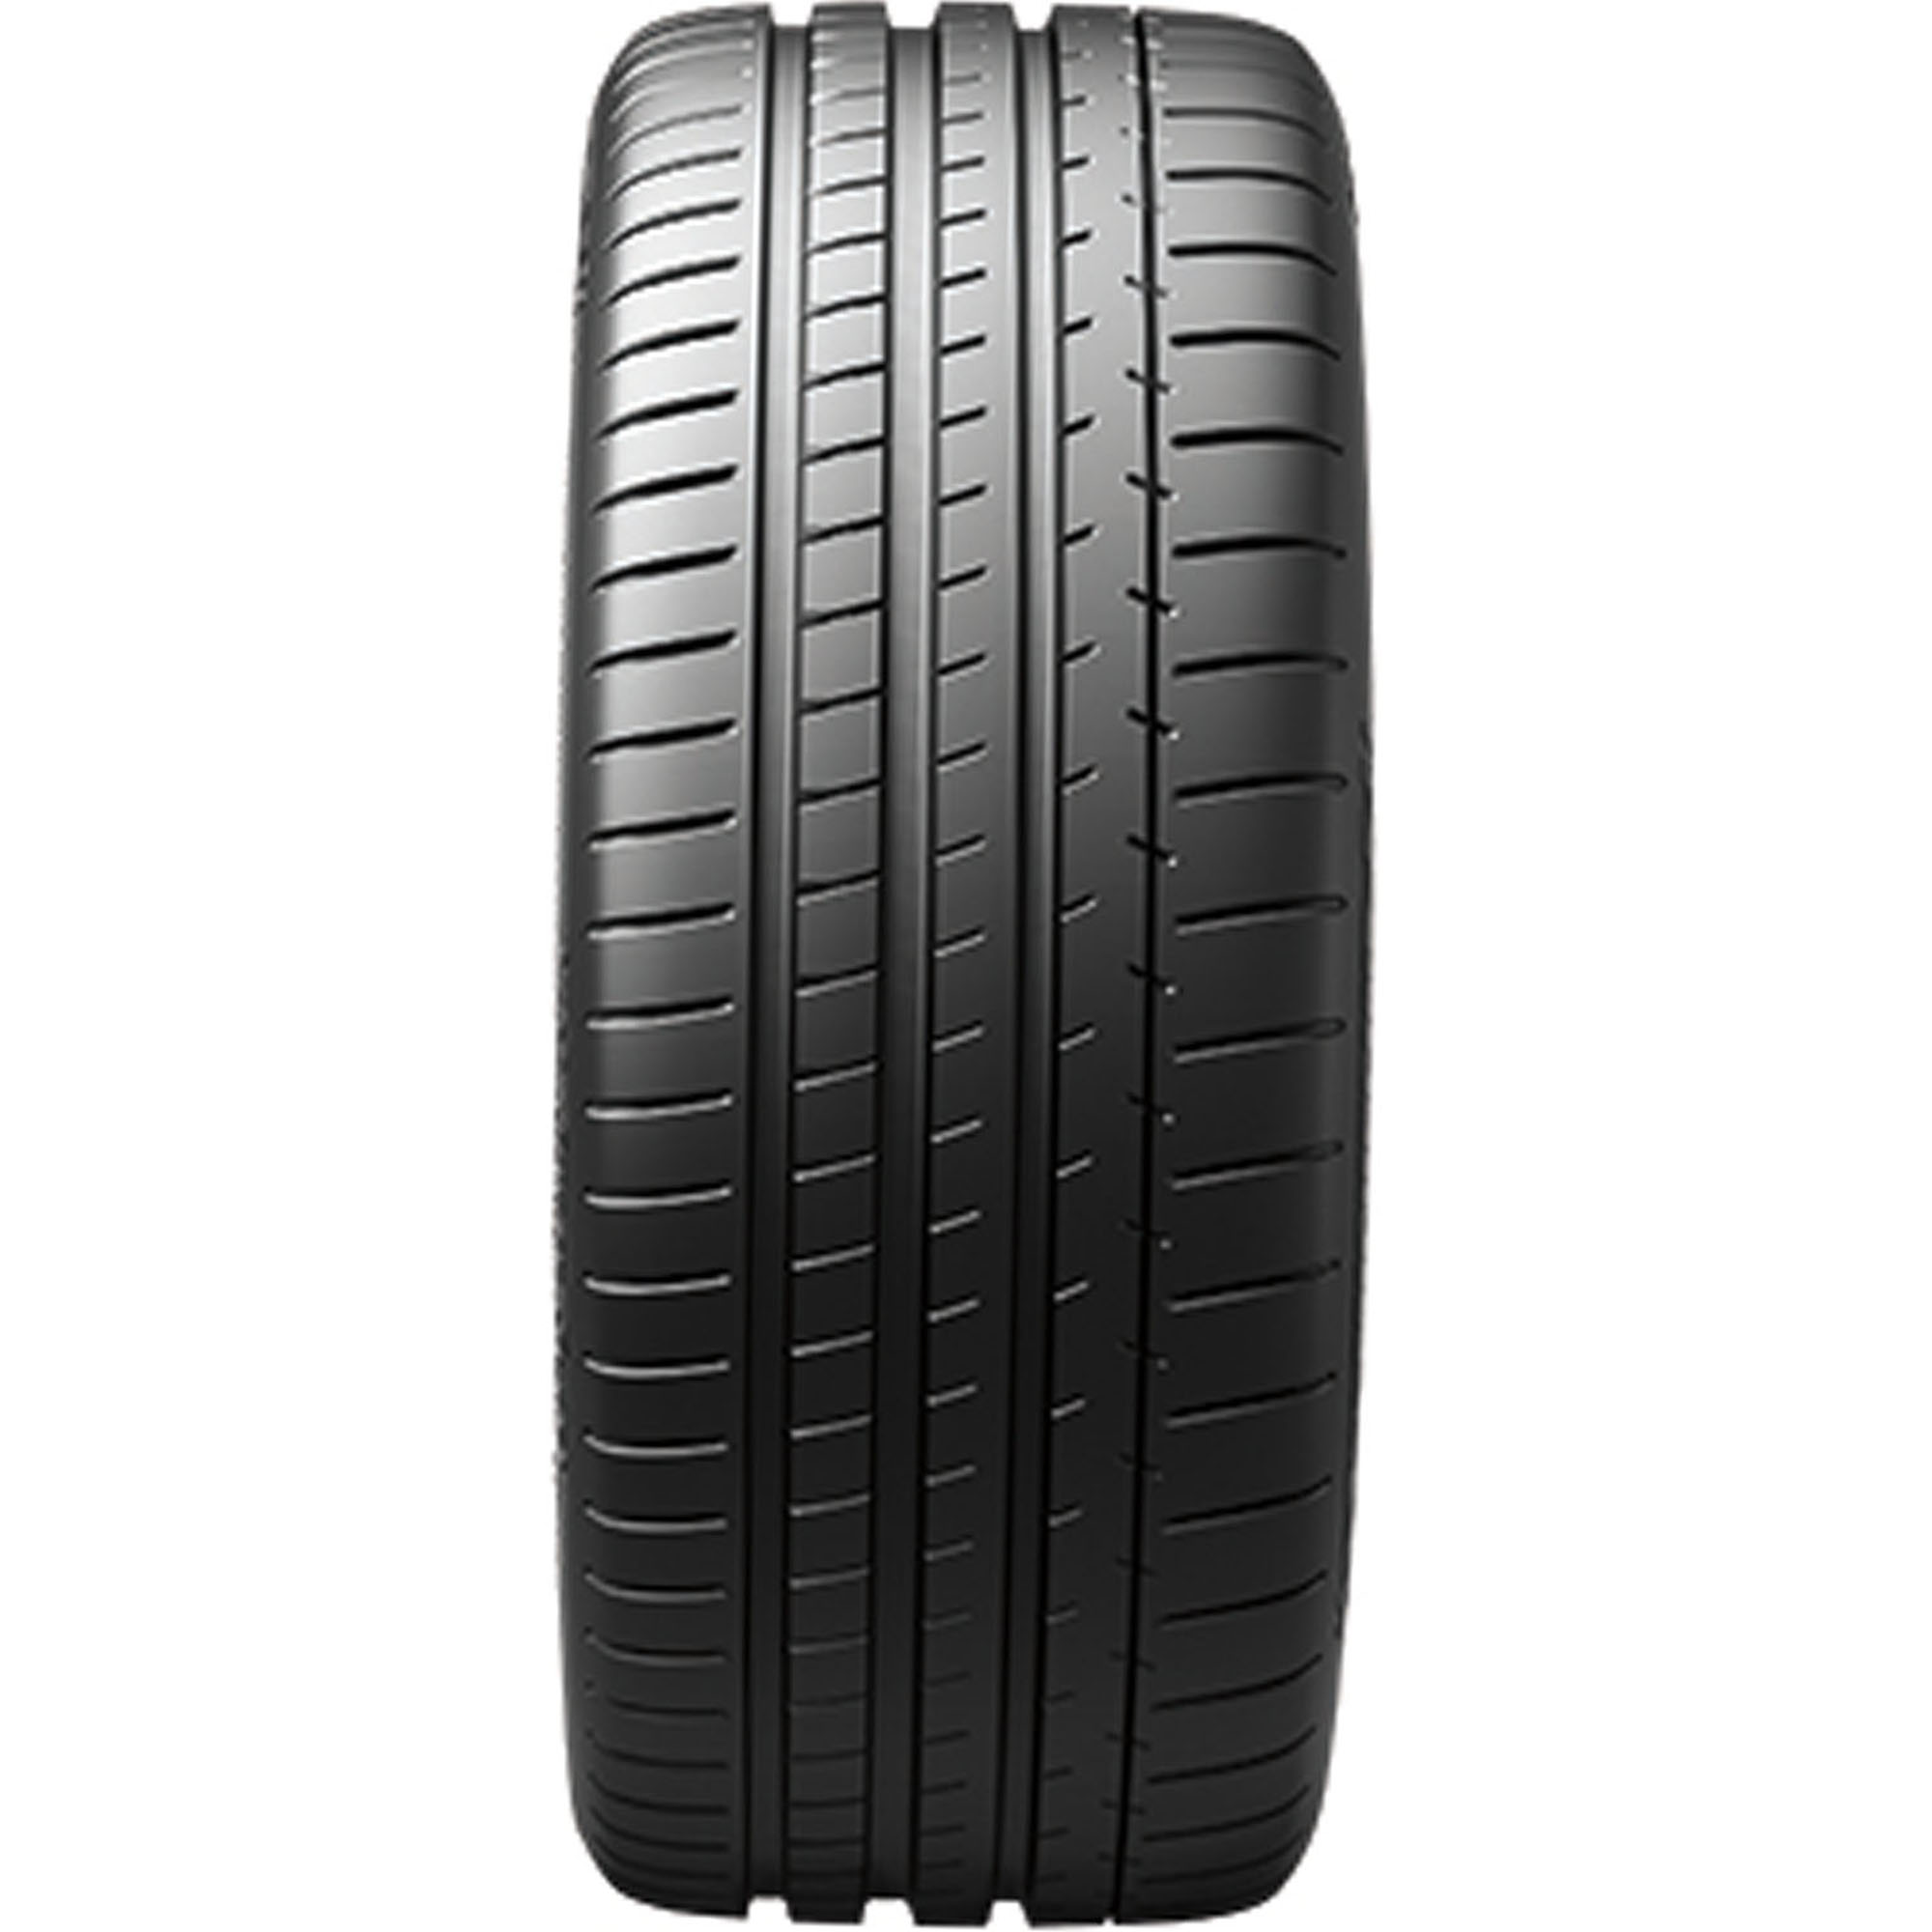 Michelin Pilot Super Sport Summer 325/30ZR21/XL 108Y Tire - image 3 of 6